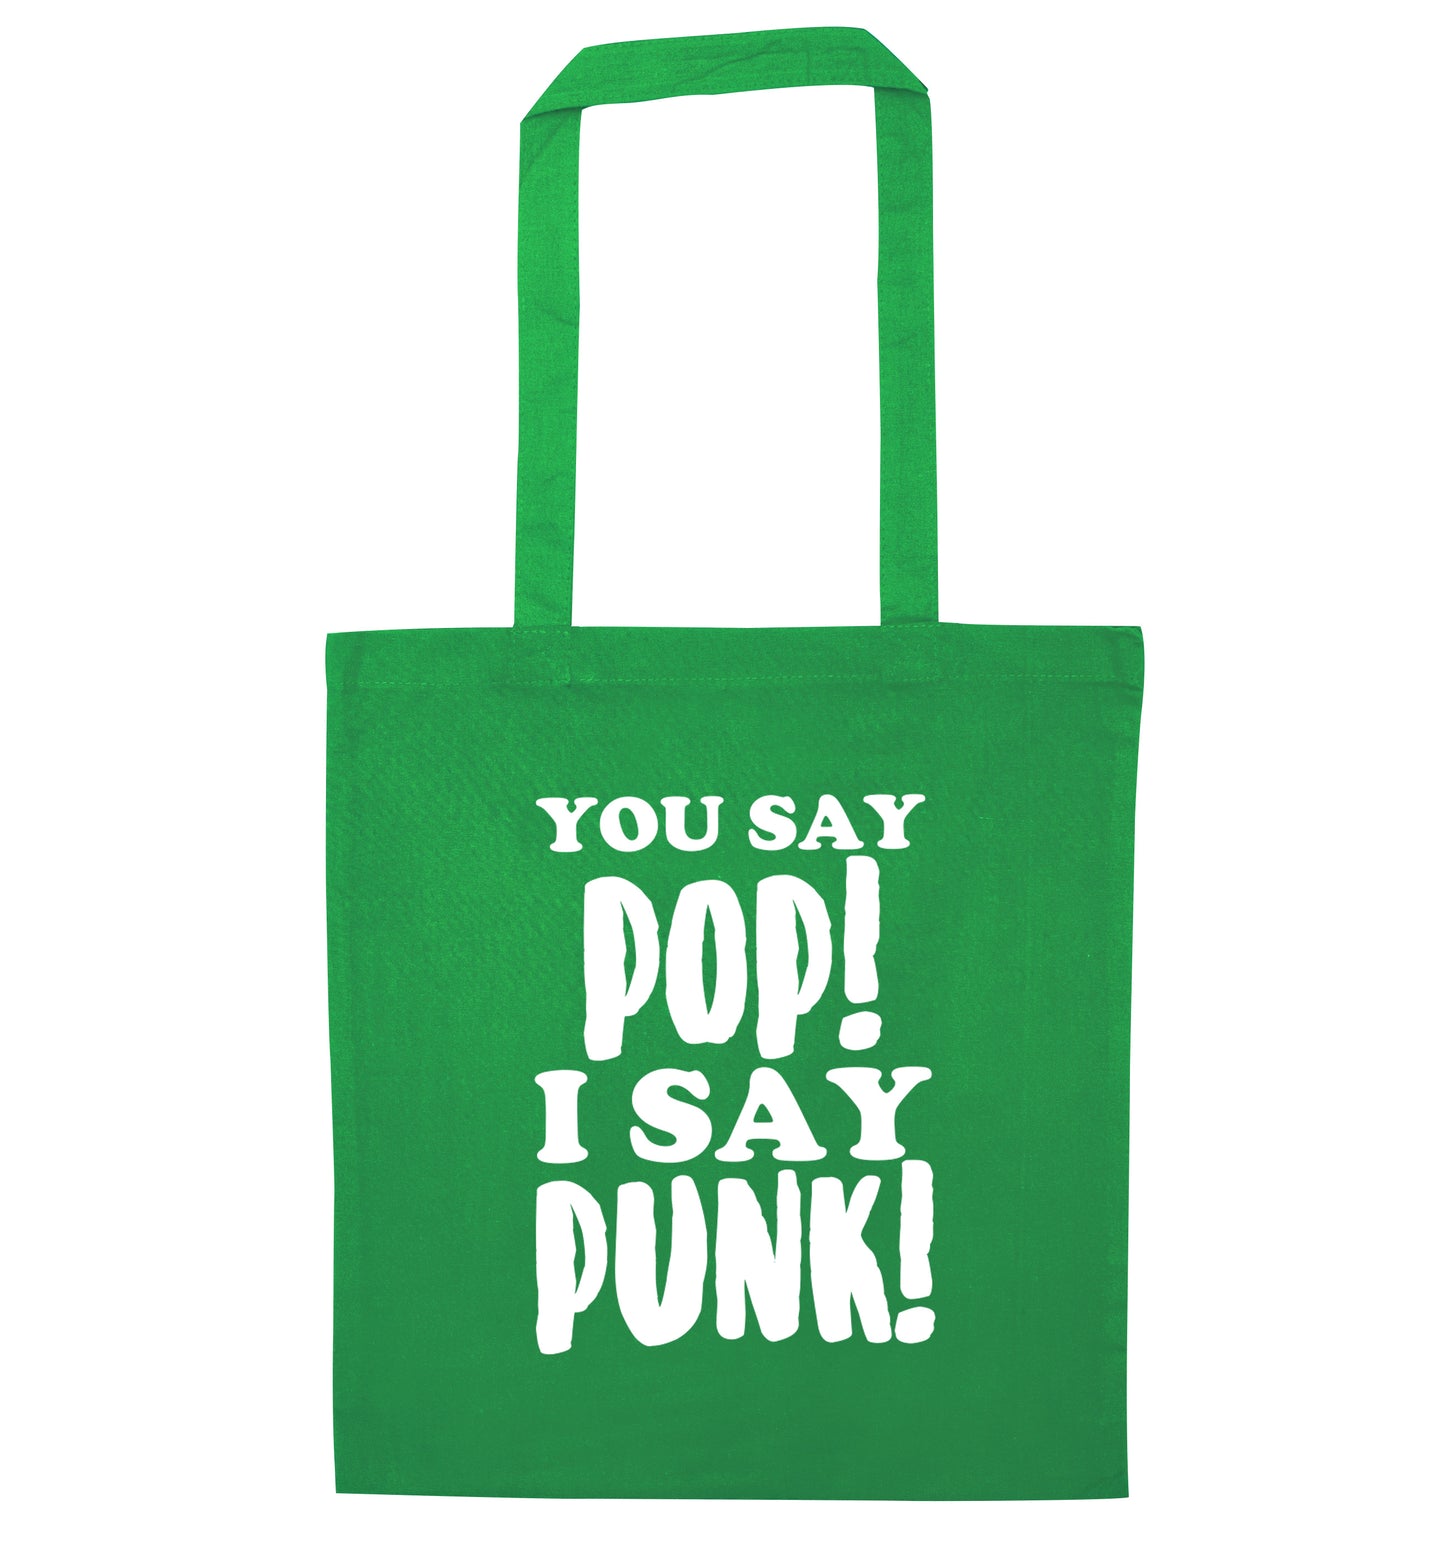 You say pop I say punk! green tote bag